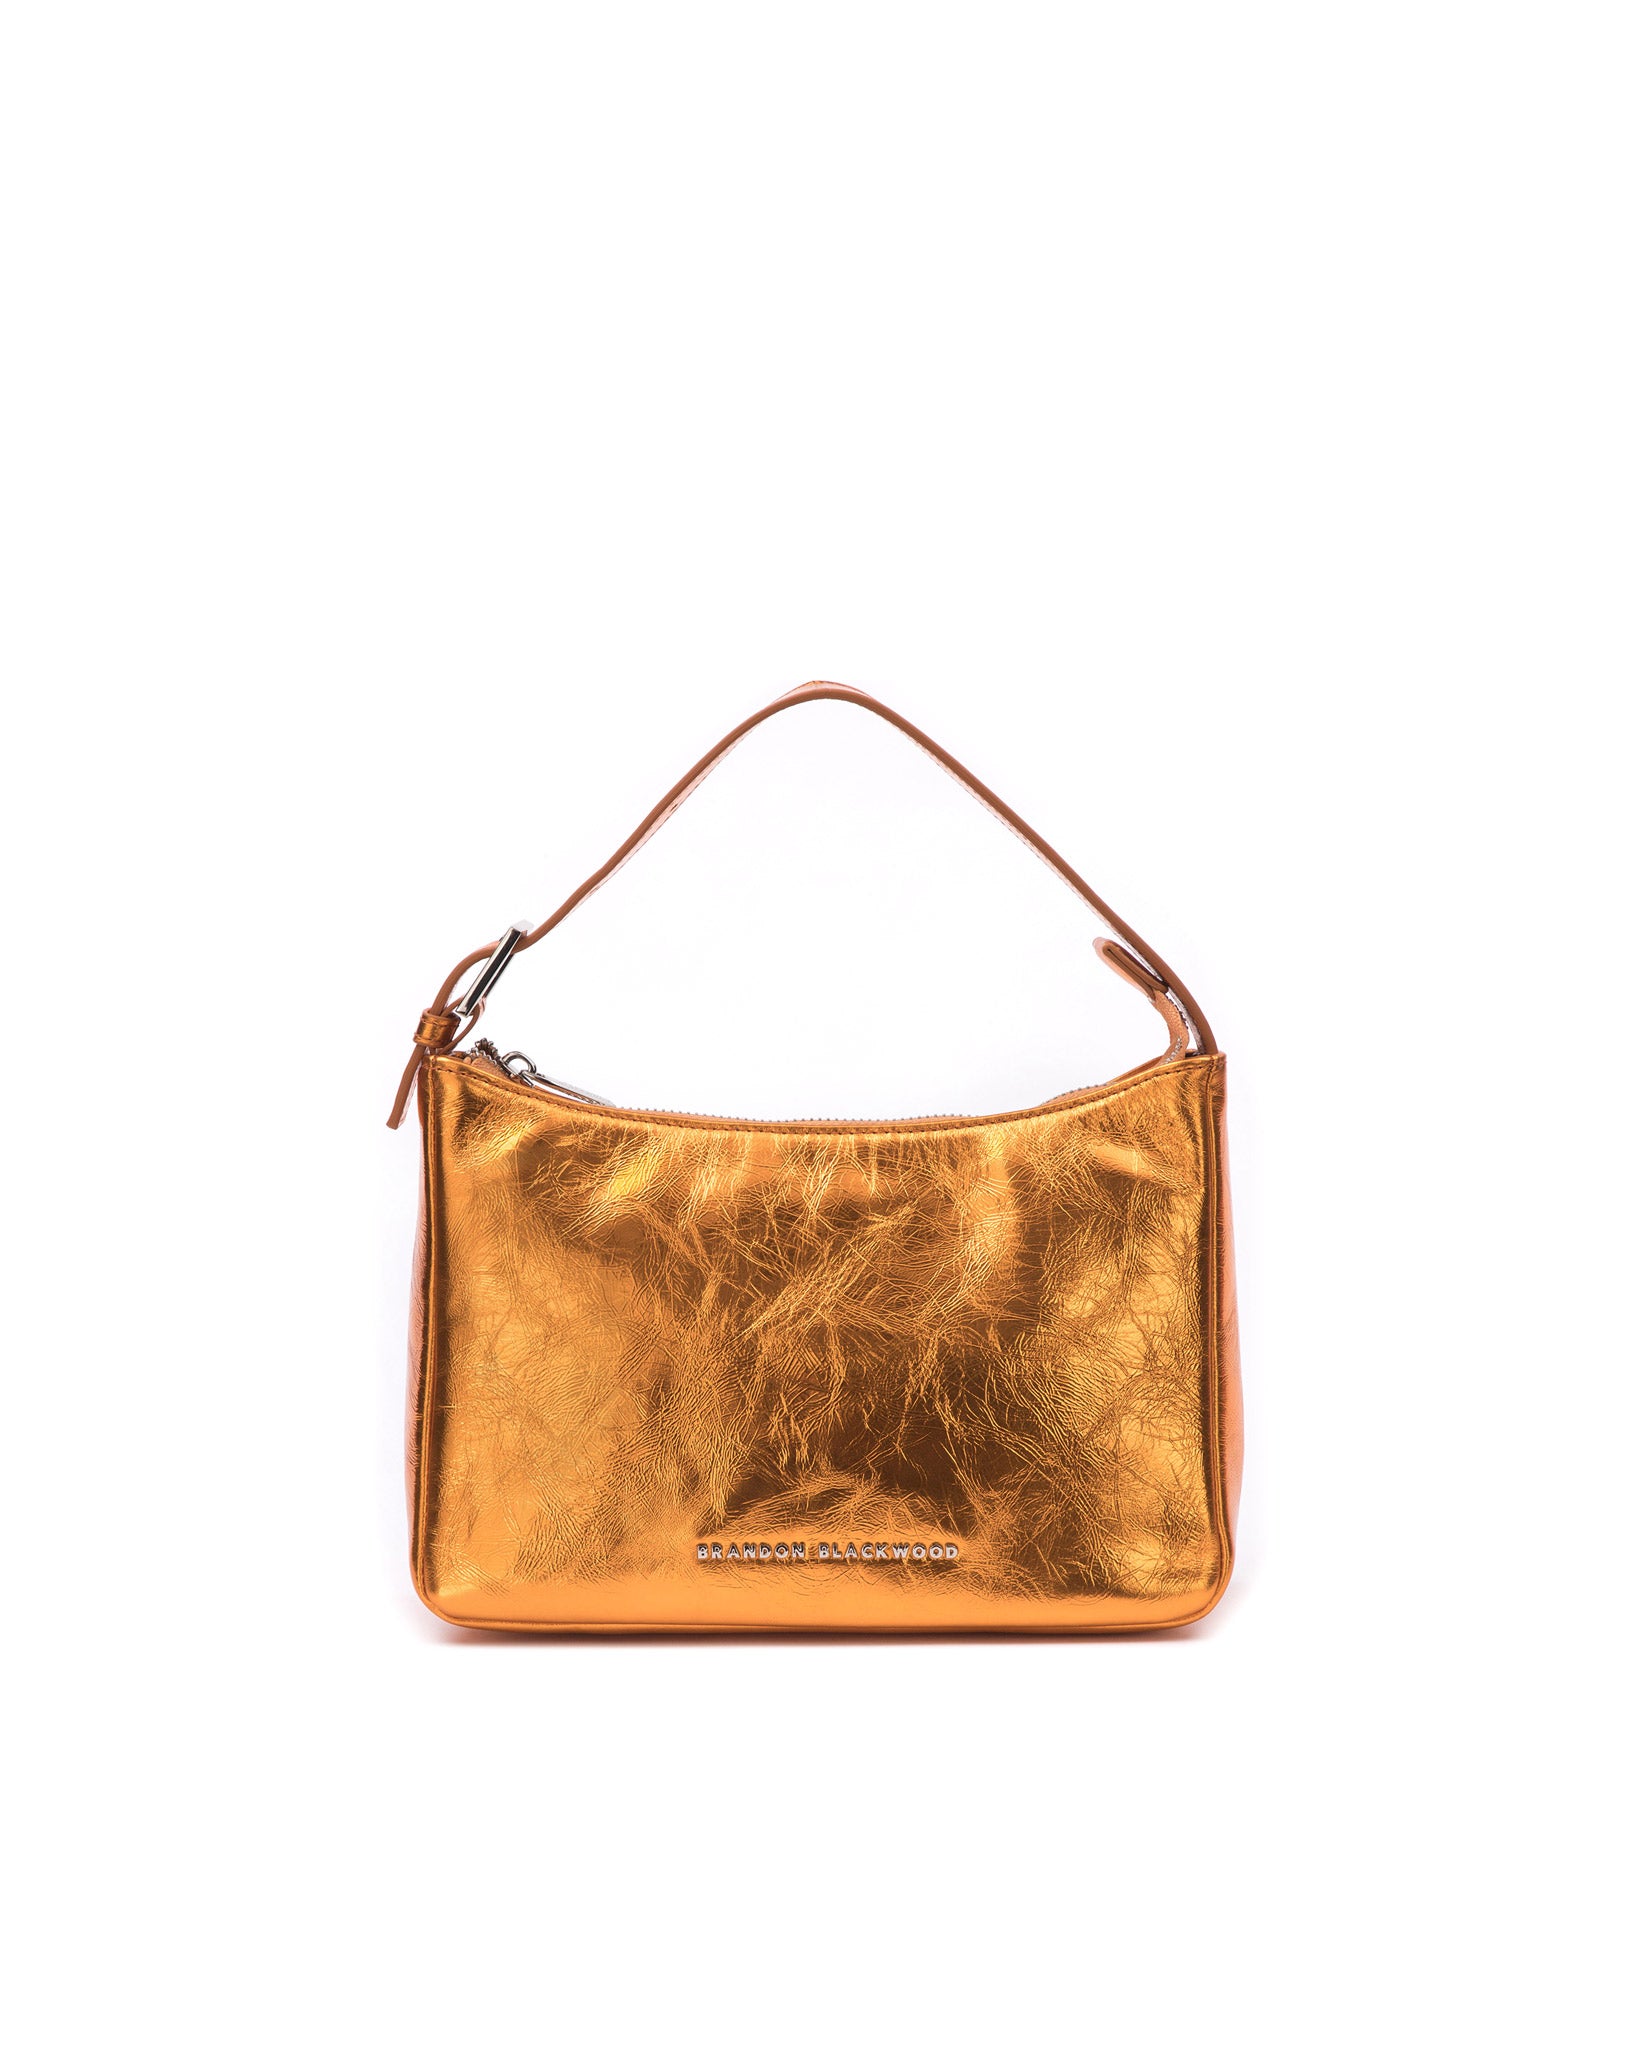 Brandon Blackwood New York - Cortni Bag - Cracked Metallic Orange Leather